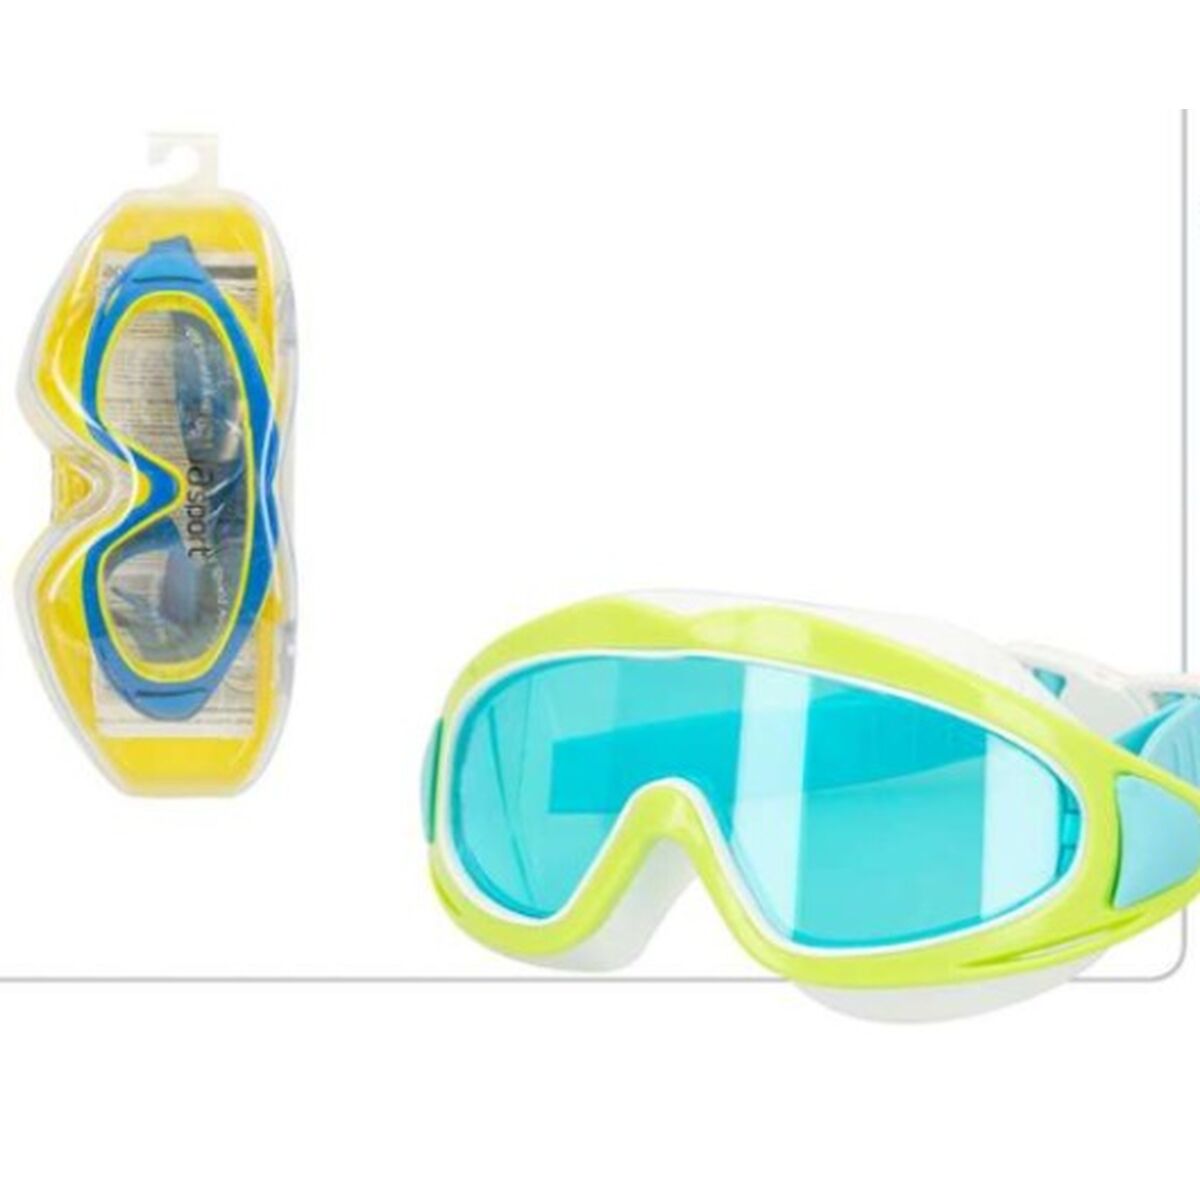 Diving Mask AquaSport Pro Uv 2 Silicone Kids Anti-mist system